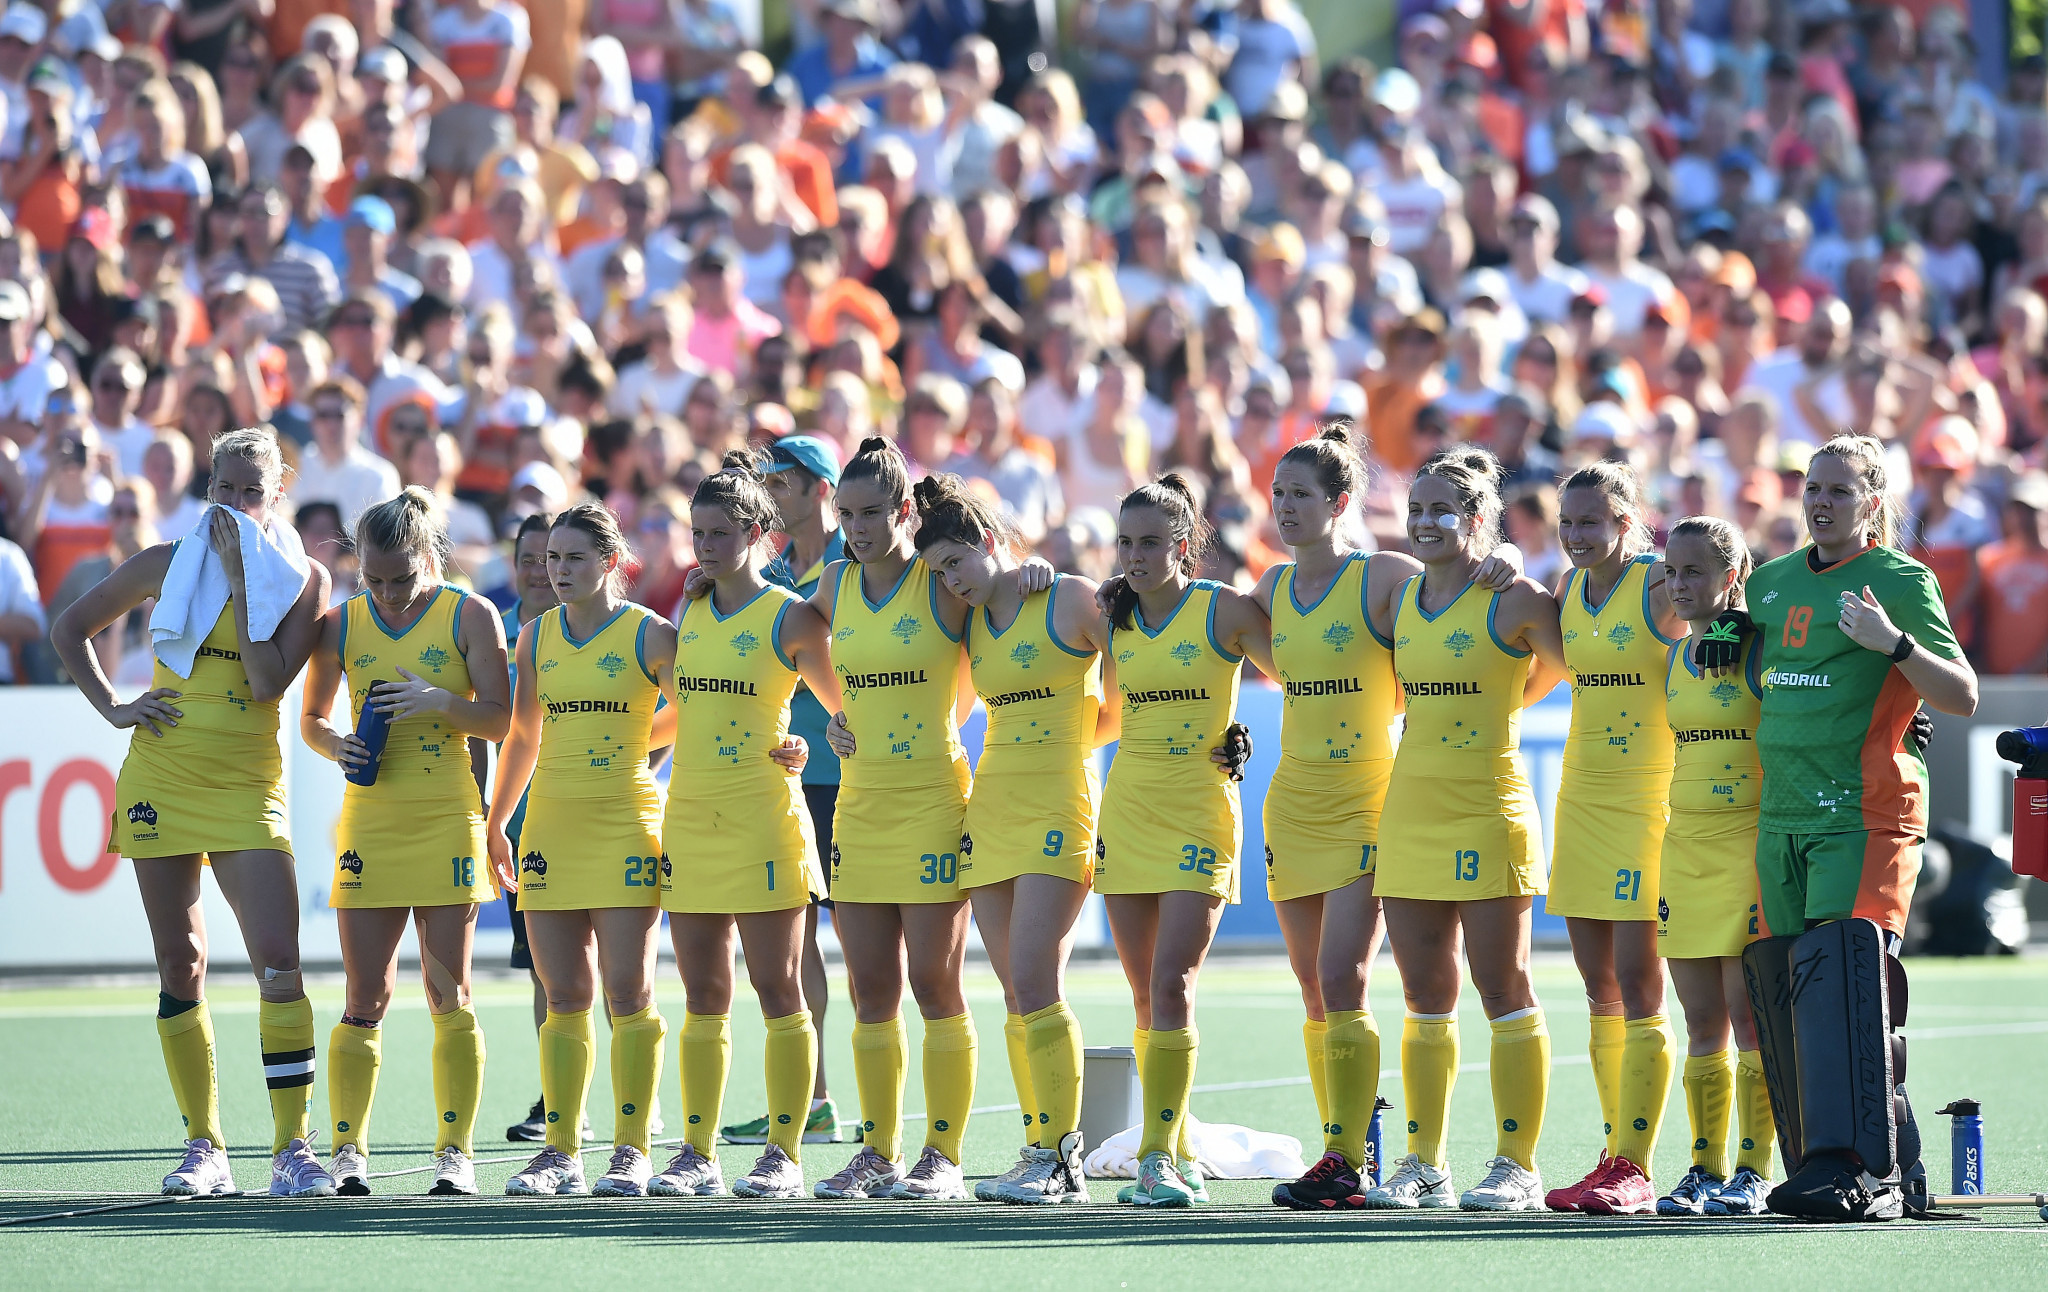 Australia women's hockey team has won three titles at the Olympics ©Getty Images